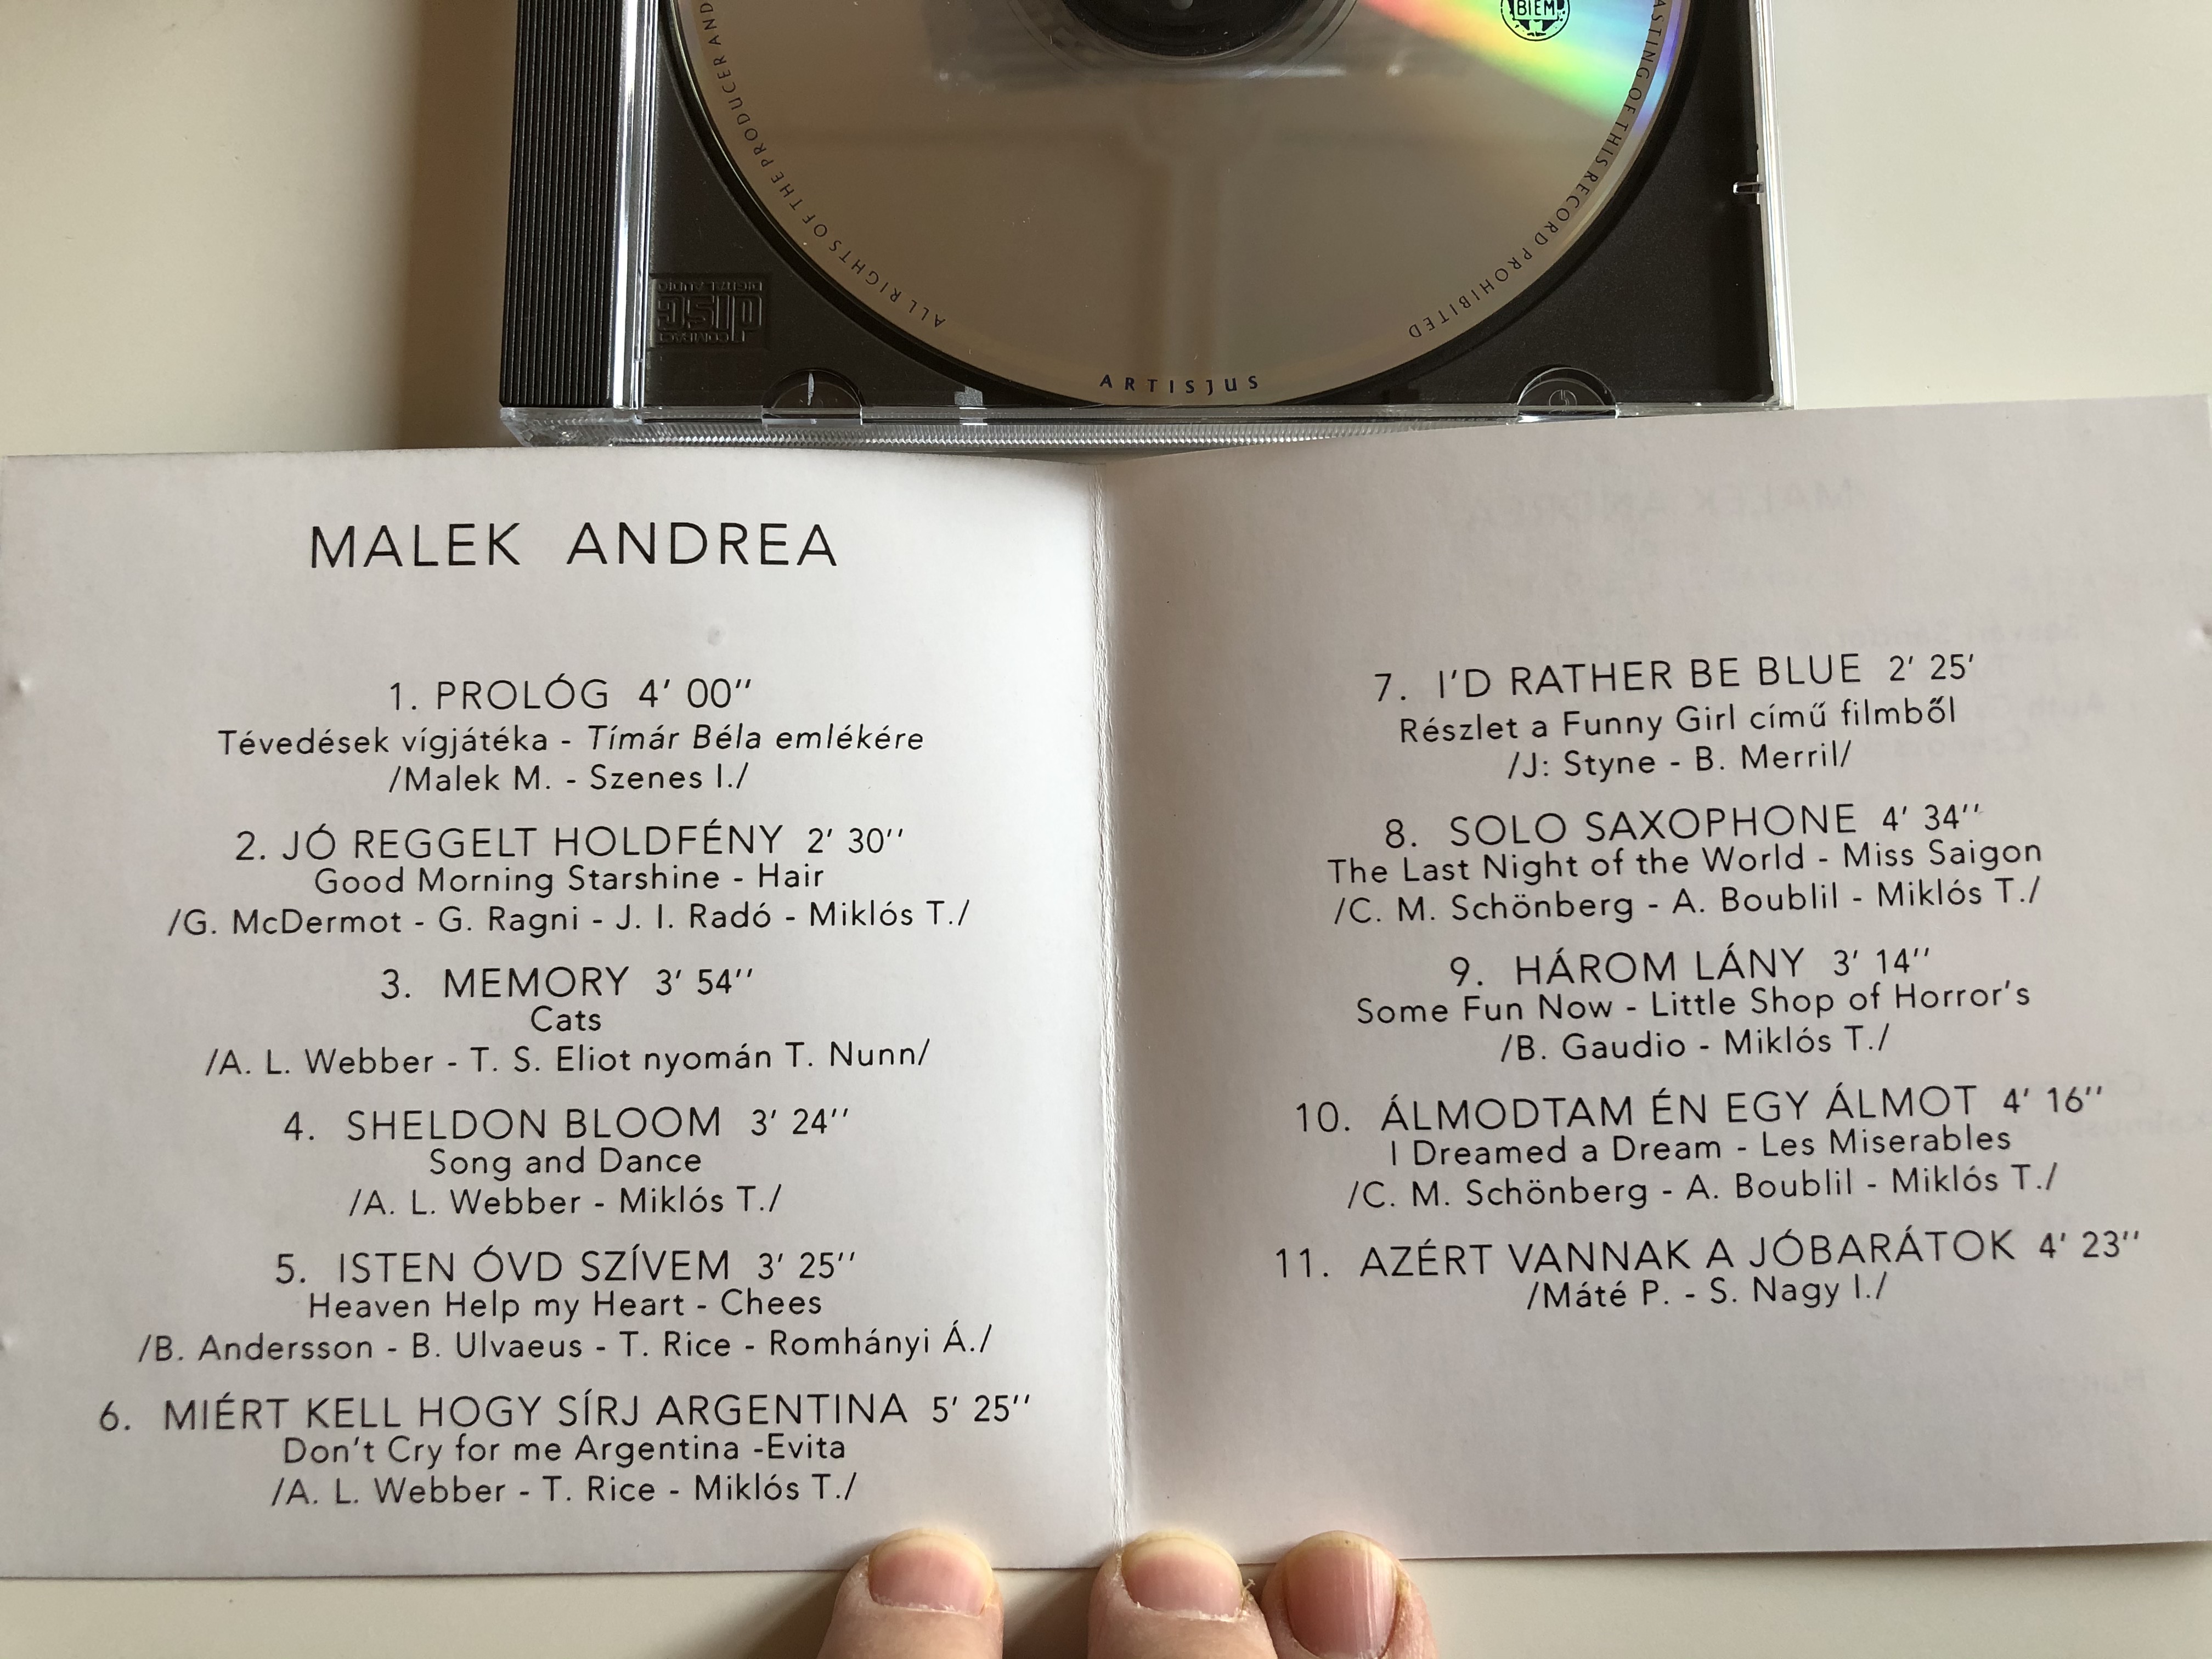 malek-andrea-hungaroton-classic-audio-cd-1994-stereo-hcd-14235-3-.jpg